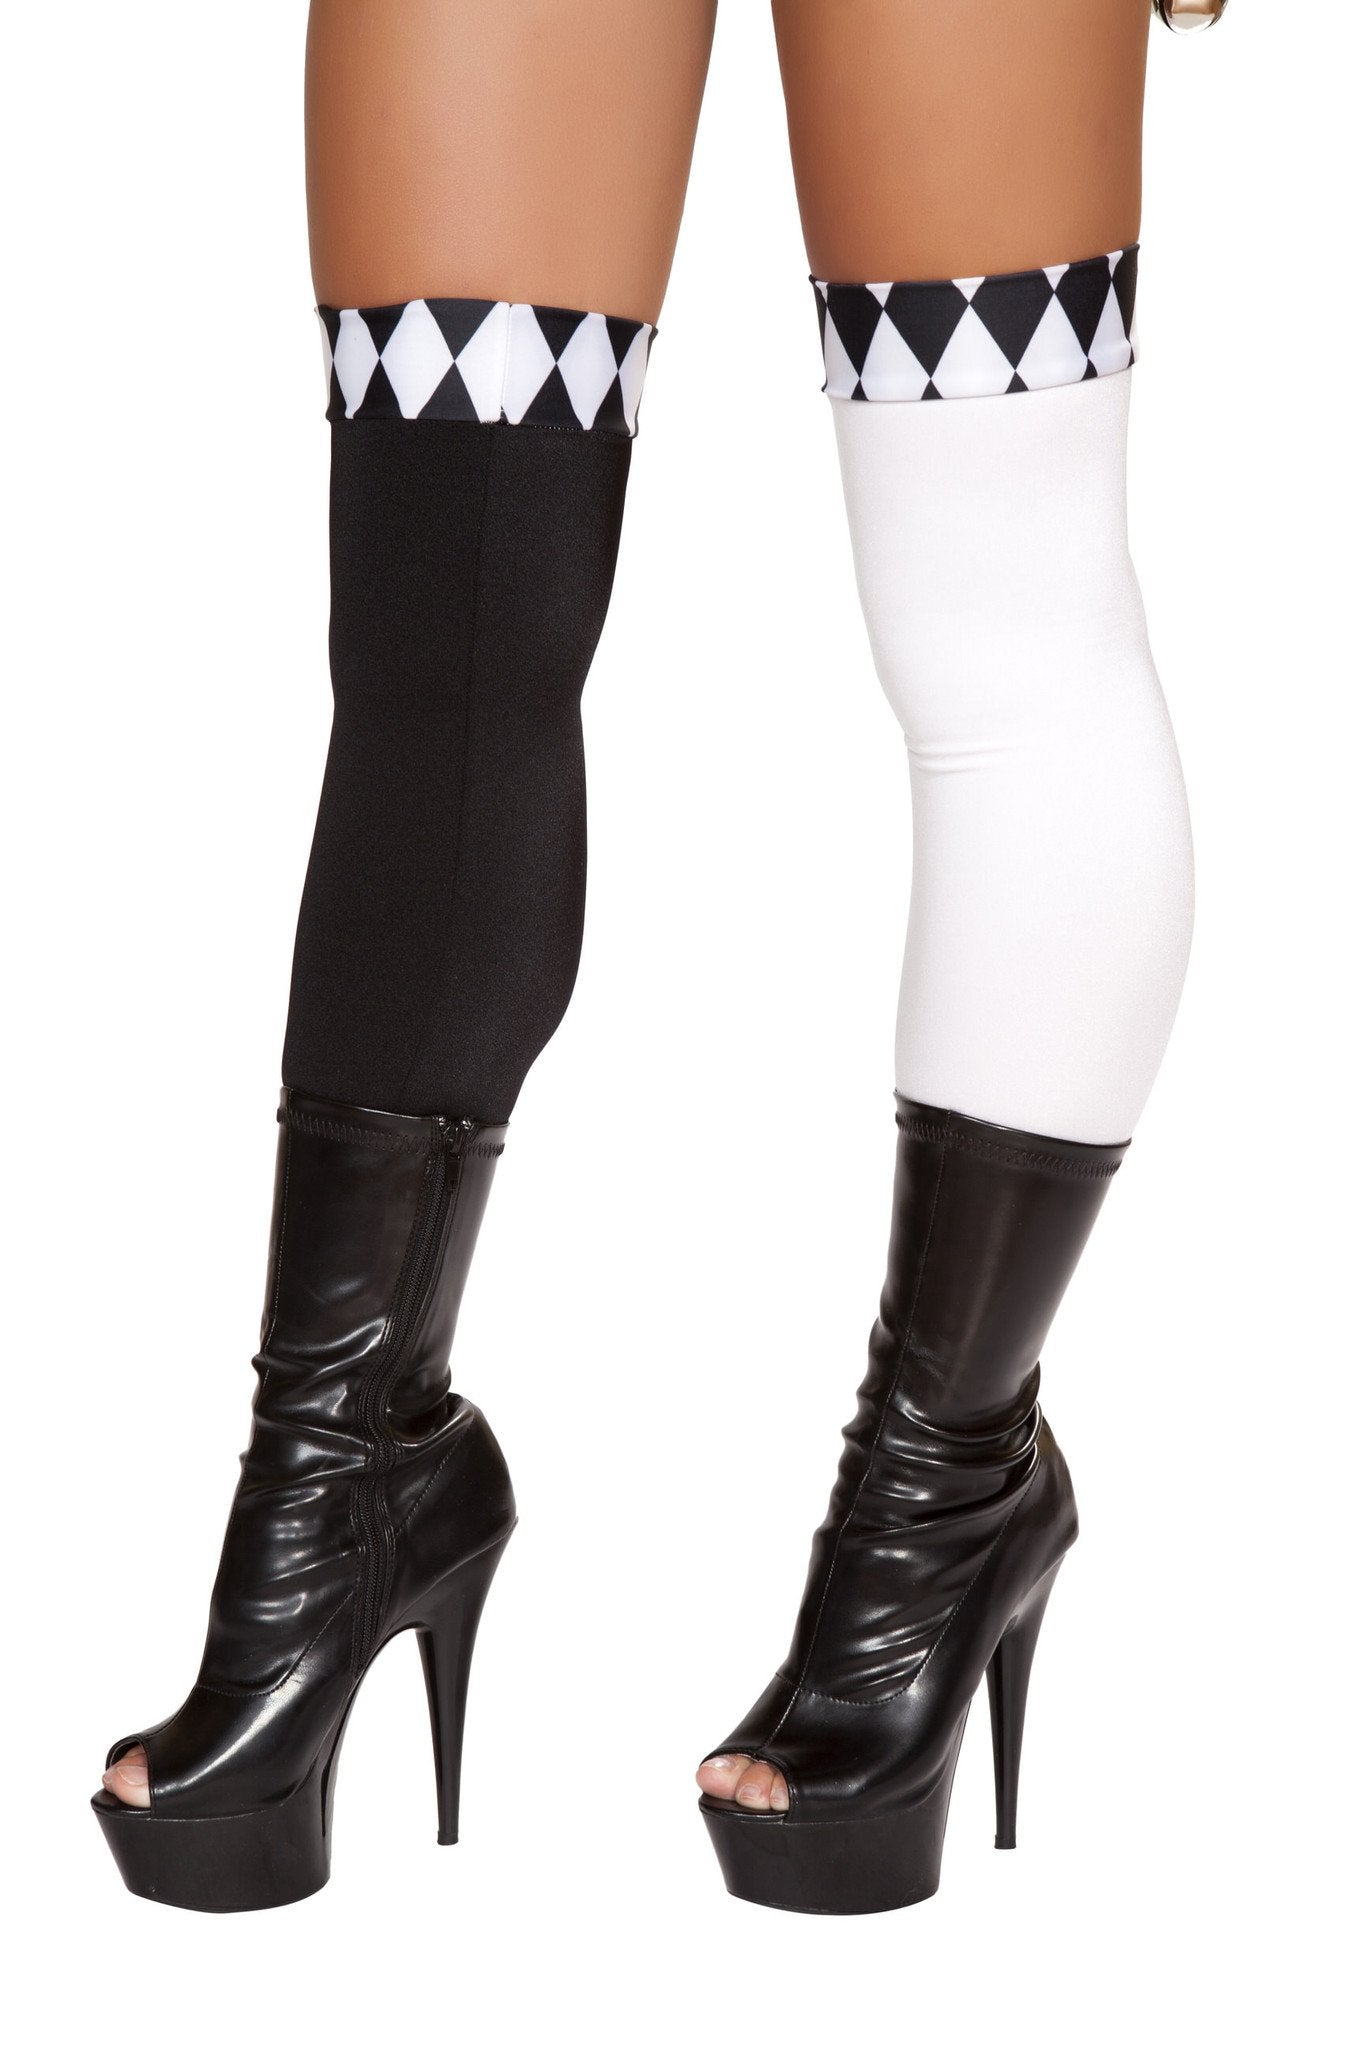 Pair of Black and White Legging Stockings